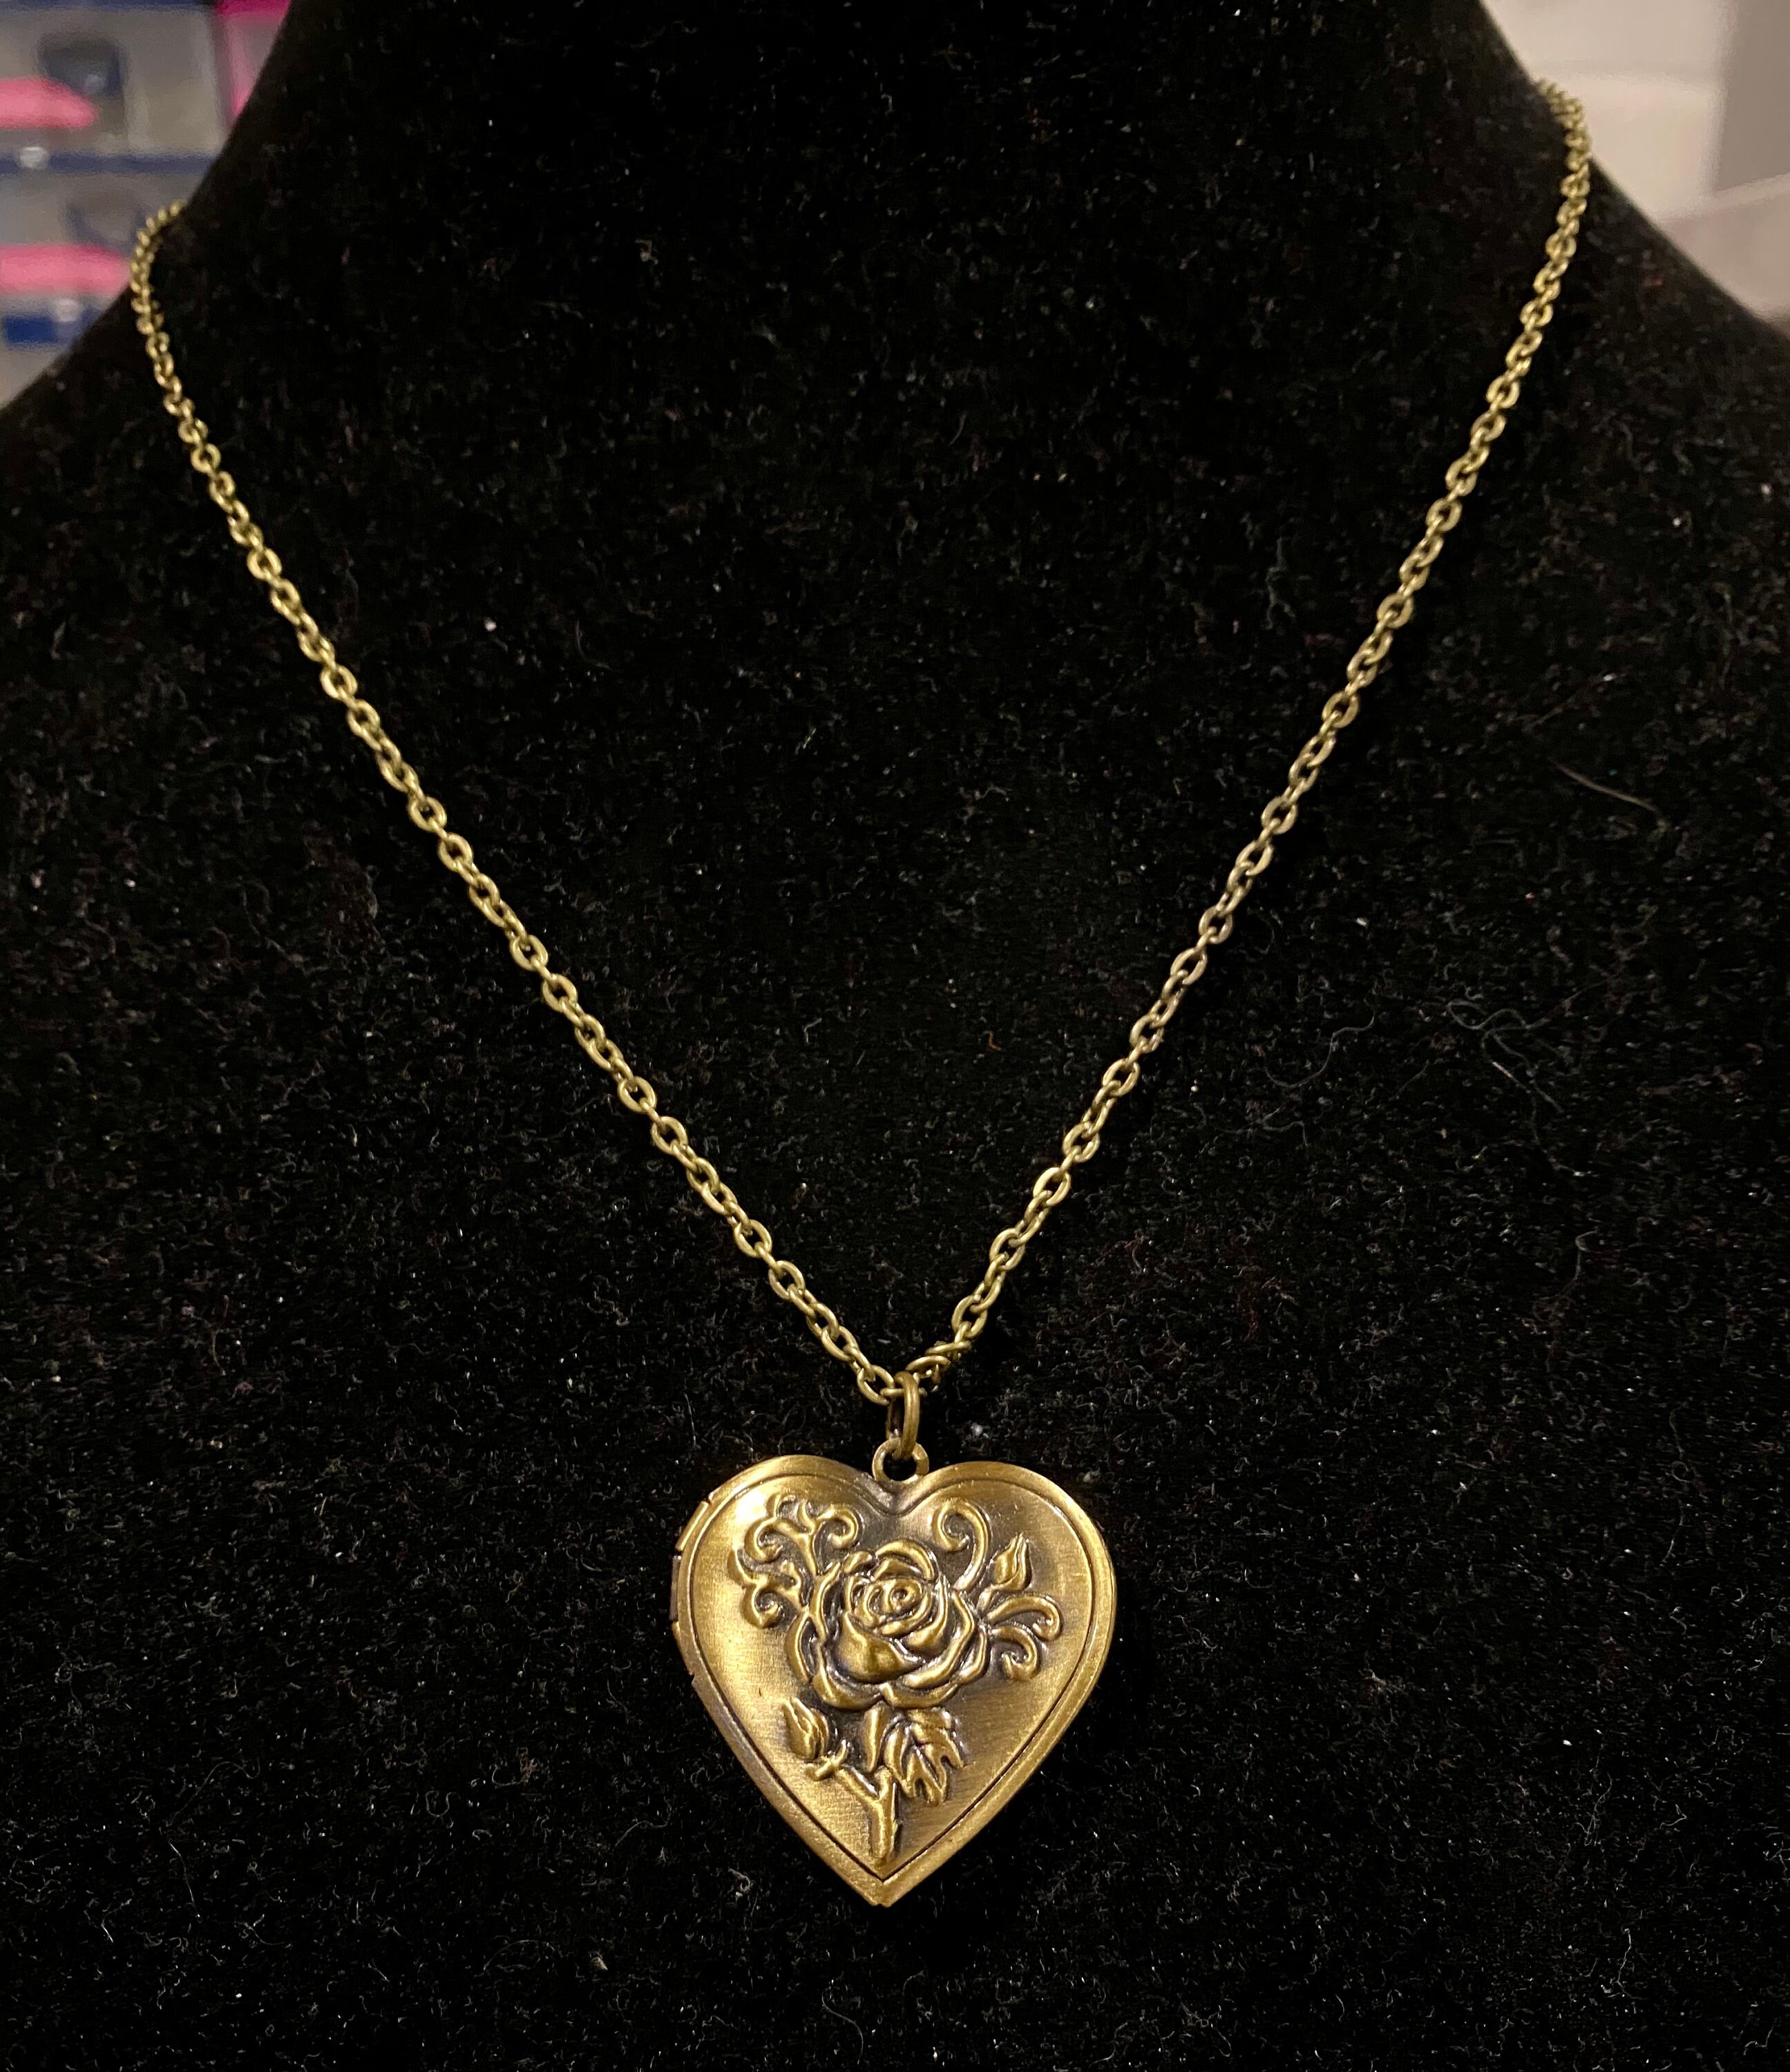 Antique Bronze Rose Heart Locket Necklace - Etsy